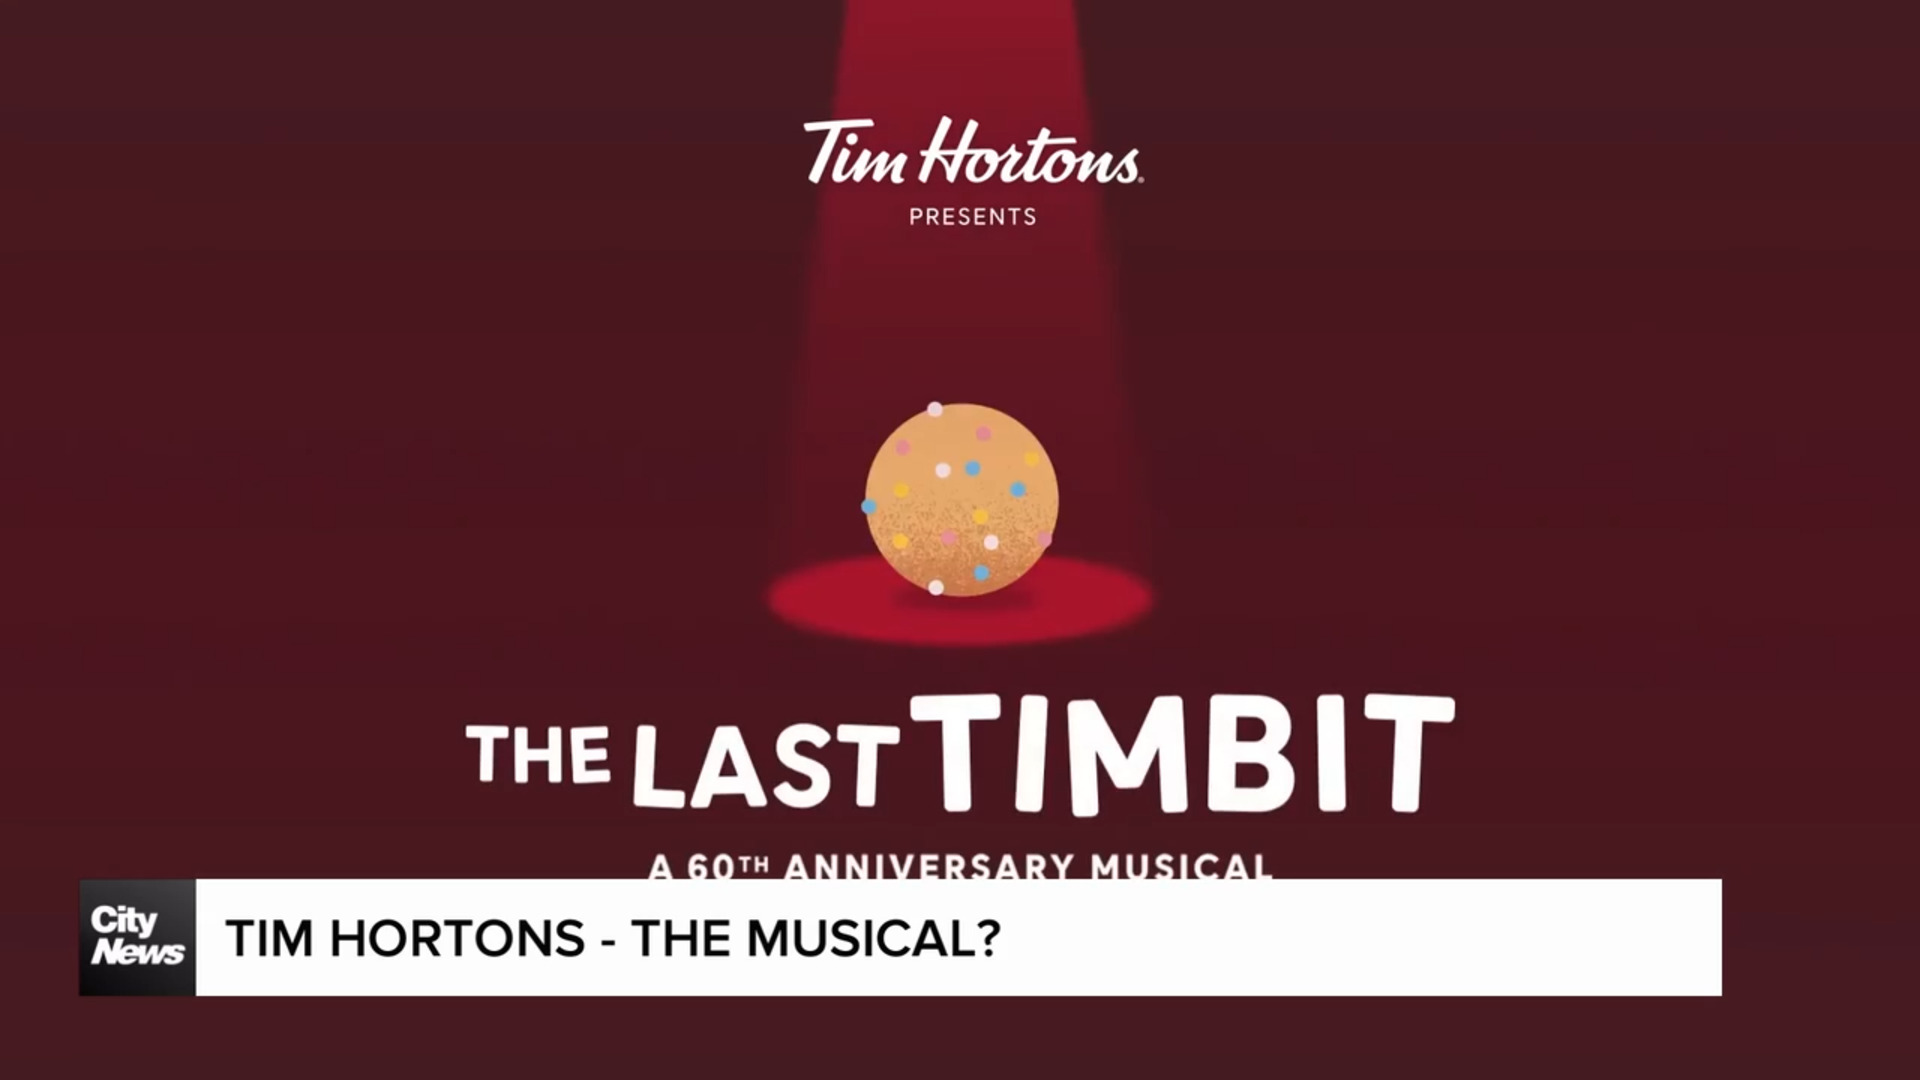 Business Report: Tim Hortons has musical aspirations